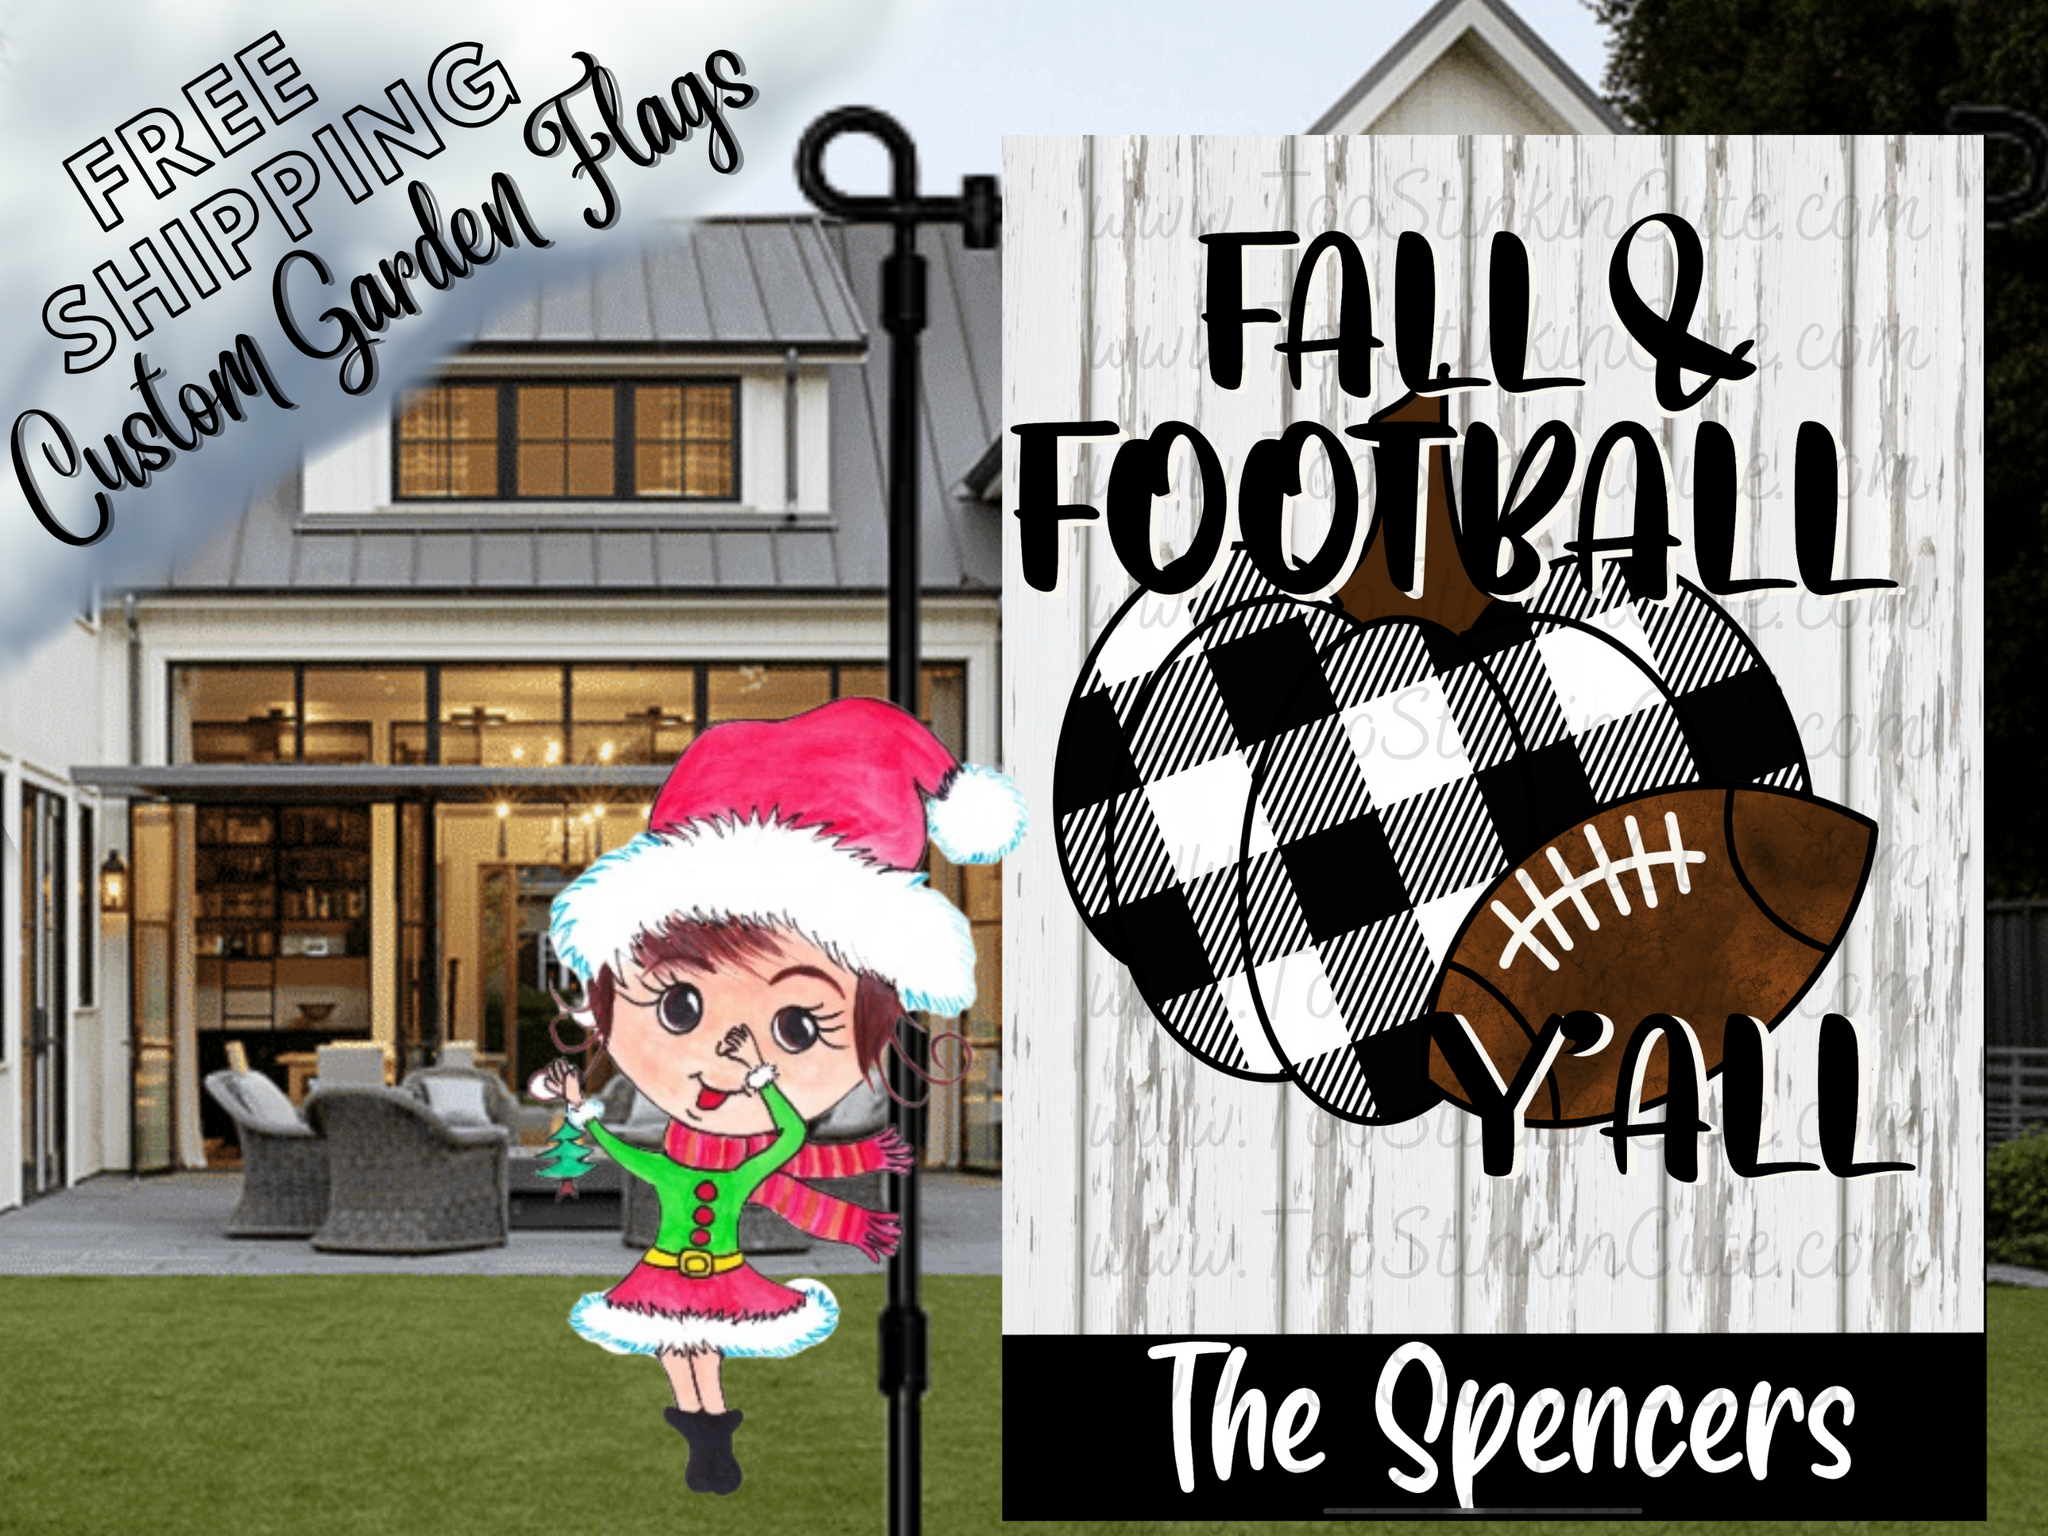 Fall & Football Y'all Personalized Garden Flag|Football Garden Flag|Football Flag|Football Fall Flag|Fall Garden Flag|Personalized Football